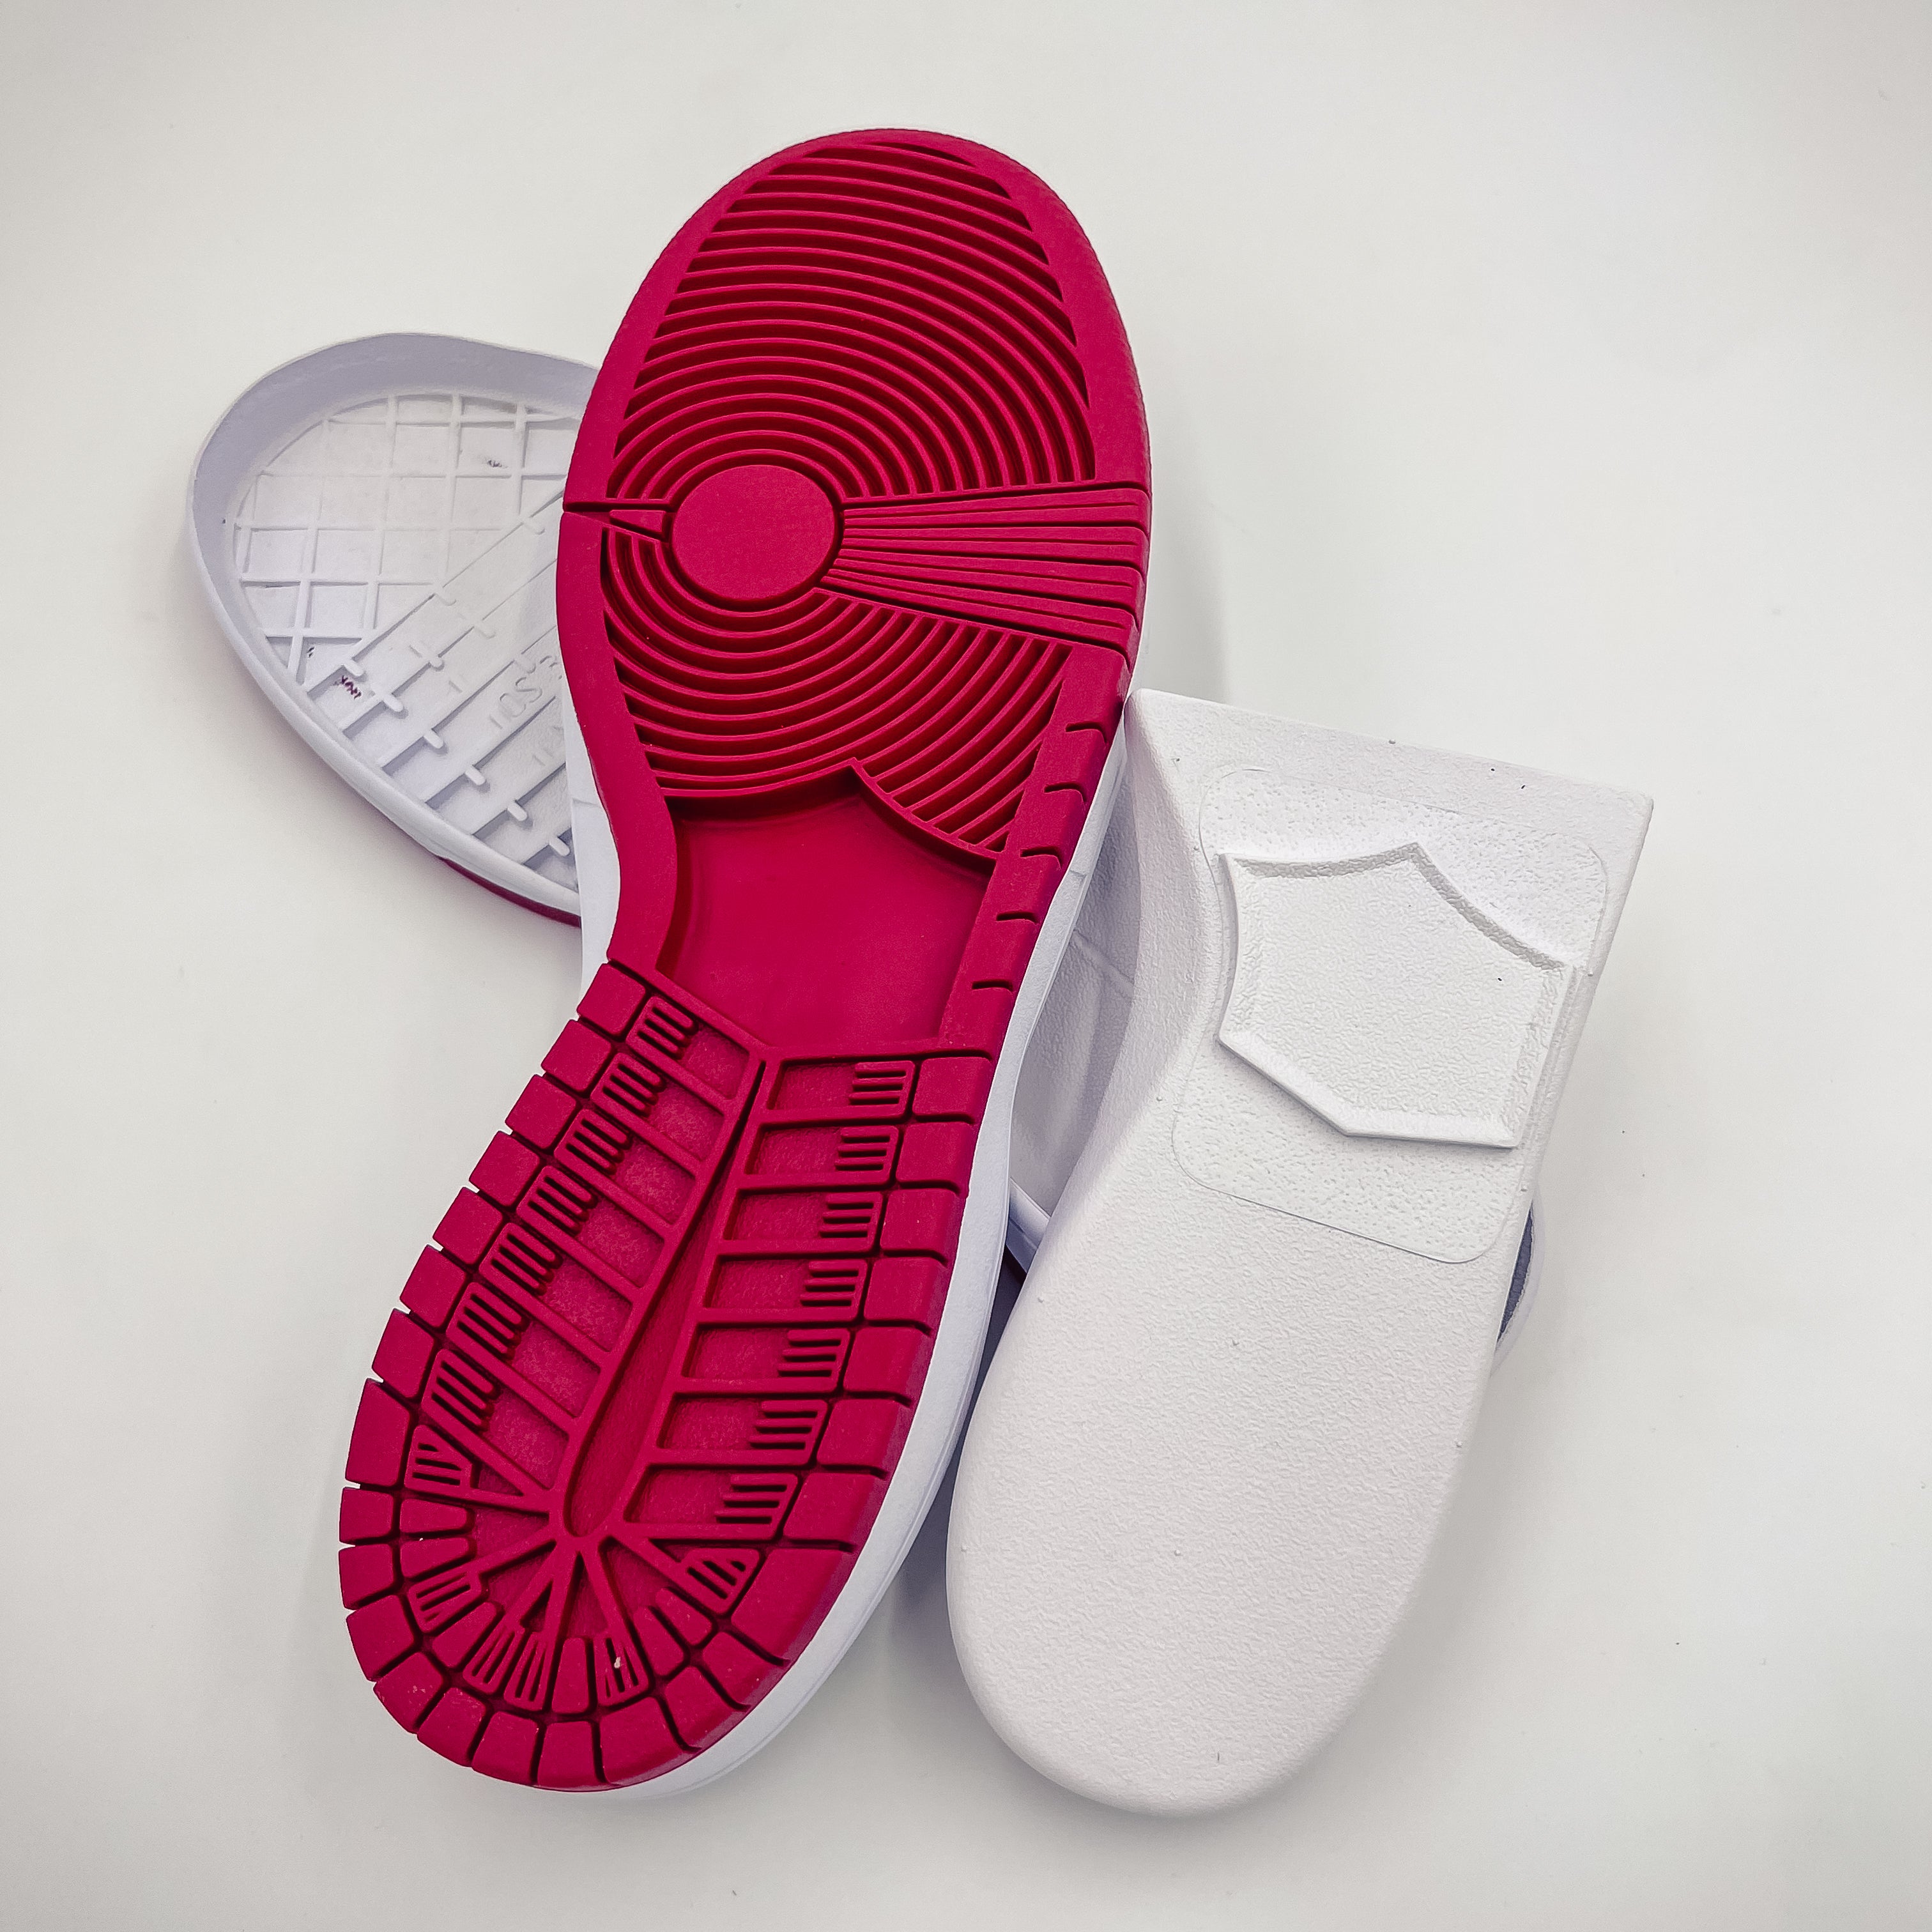 SkateBoard (SB Dunk) Shoe Soles, White/Red